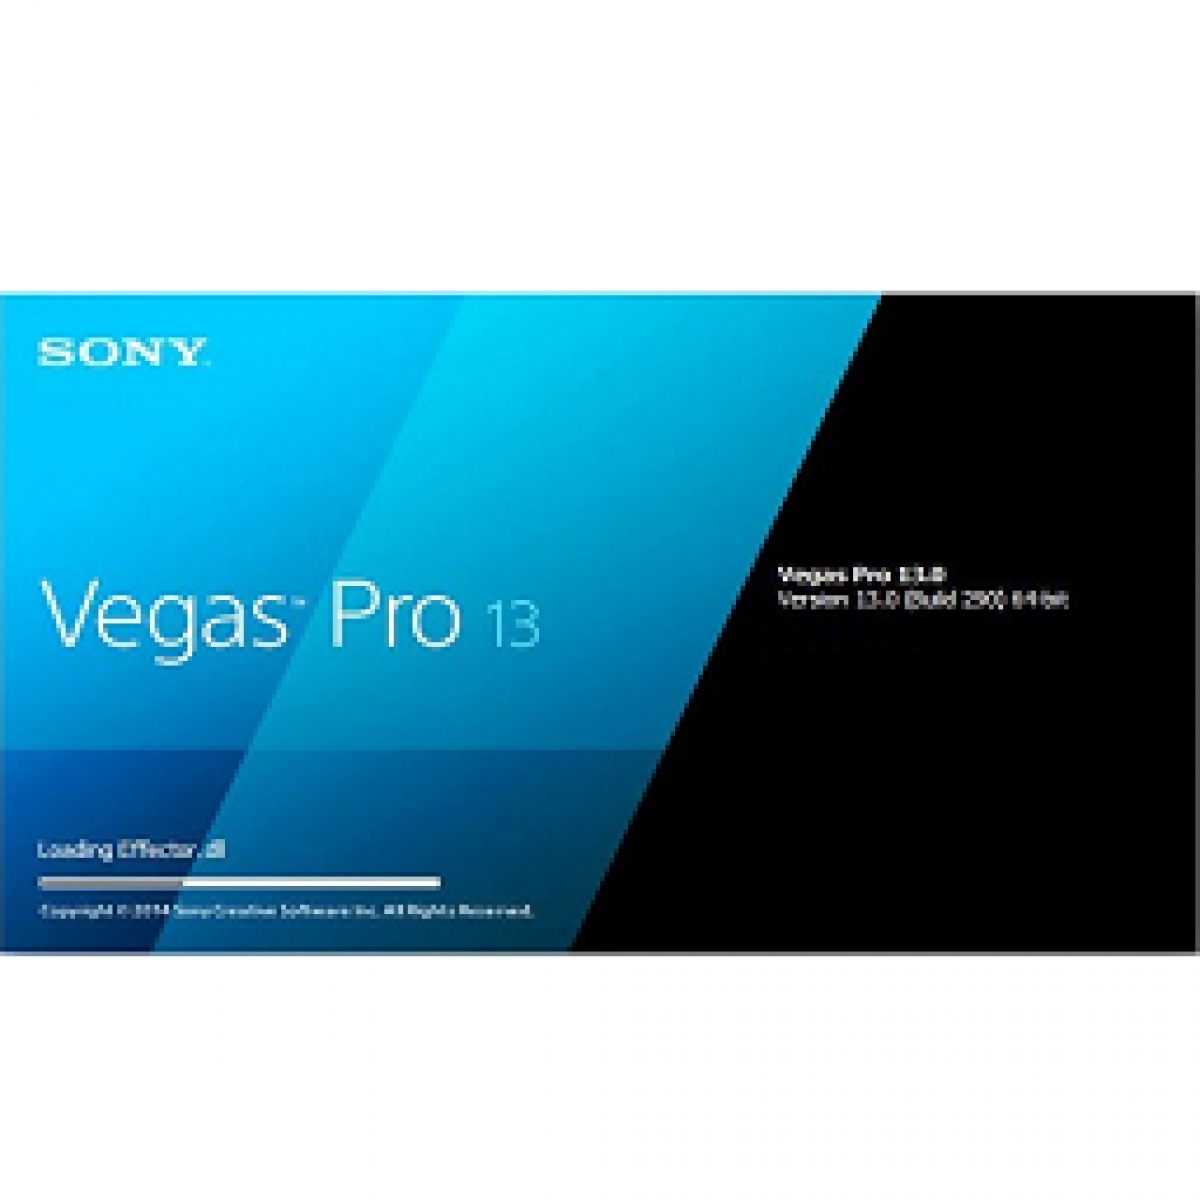 Sony Vegas Pro 13 0 453 Portable Free Download